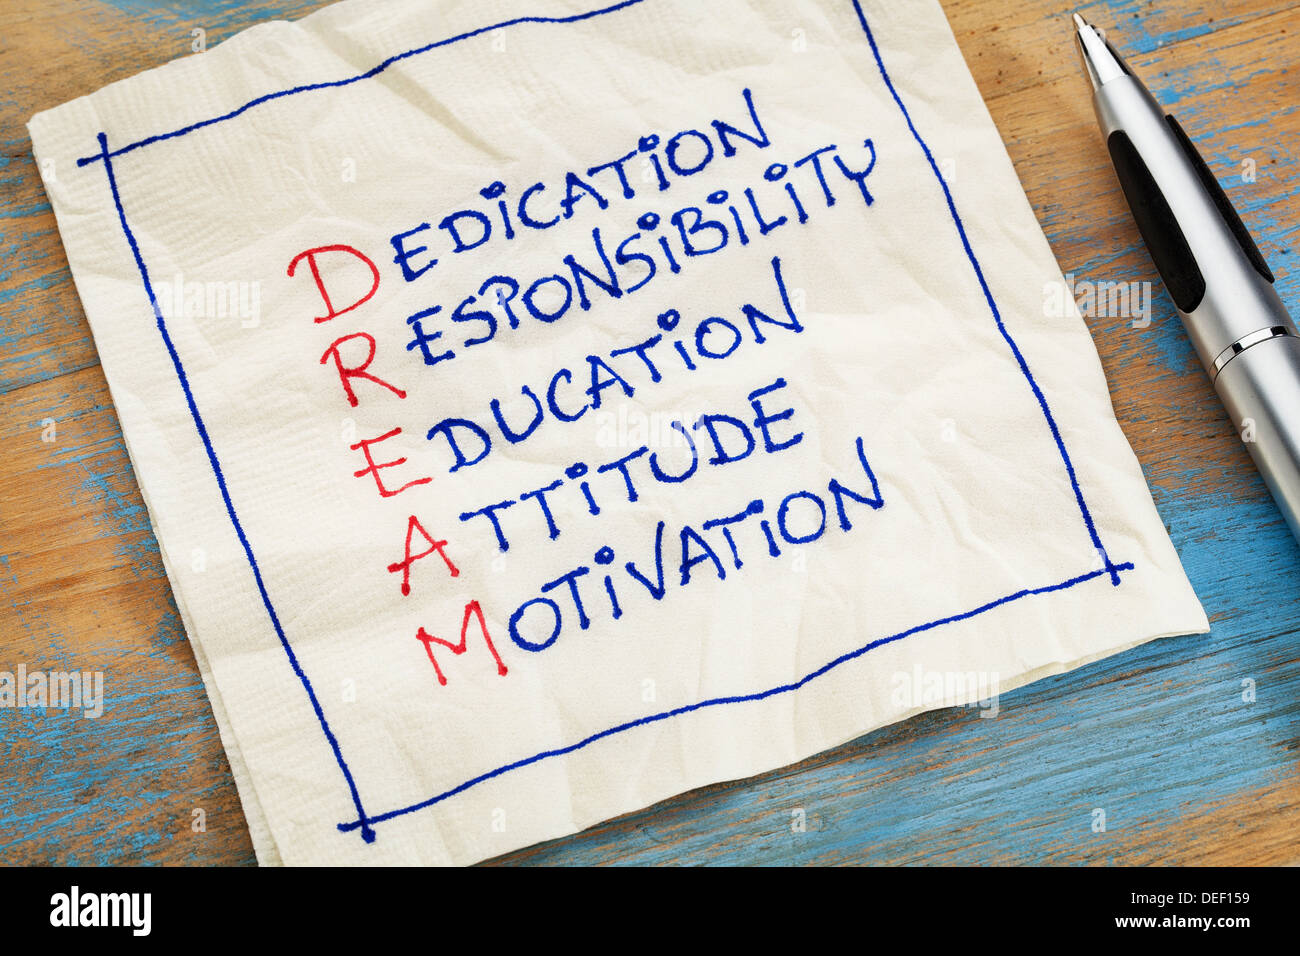 dedication, responsibility, education, attitude, motivation - DREAM acronym - a napkin doodle Stock Photo